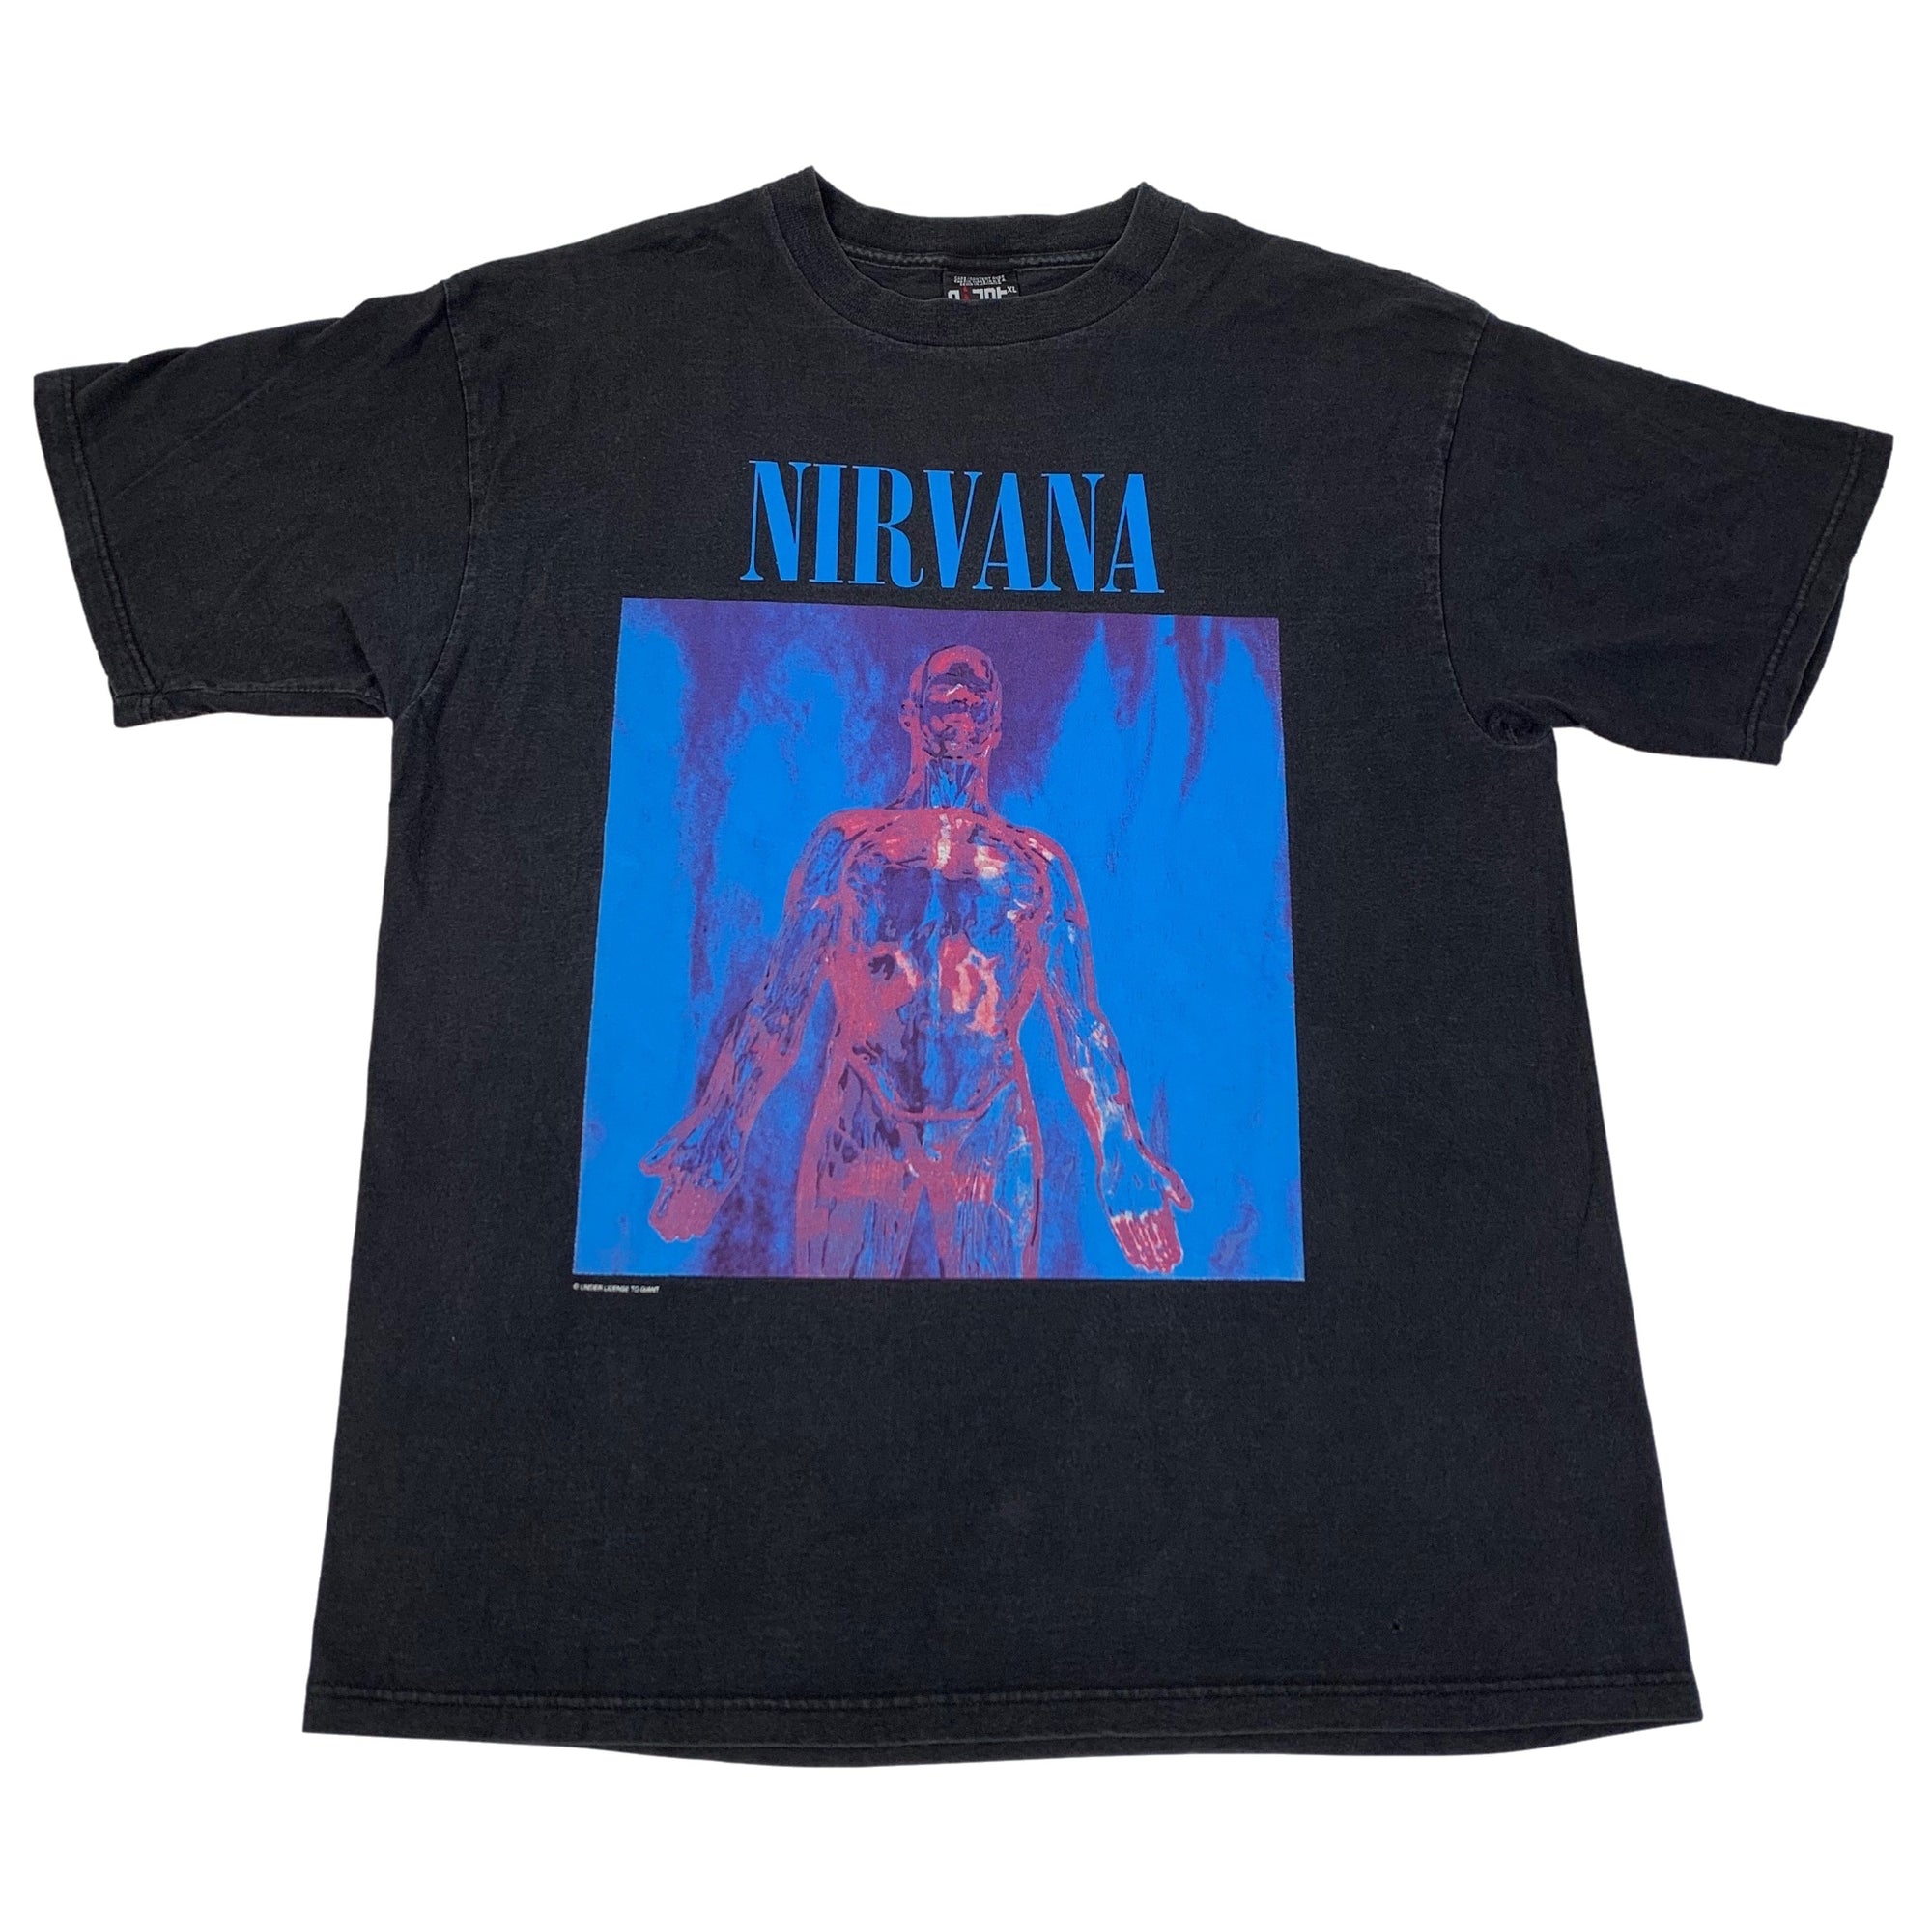 Vintage Nirvana "Sliver" T-Shirt - jointcustodydc